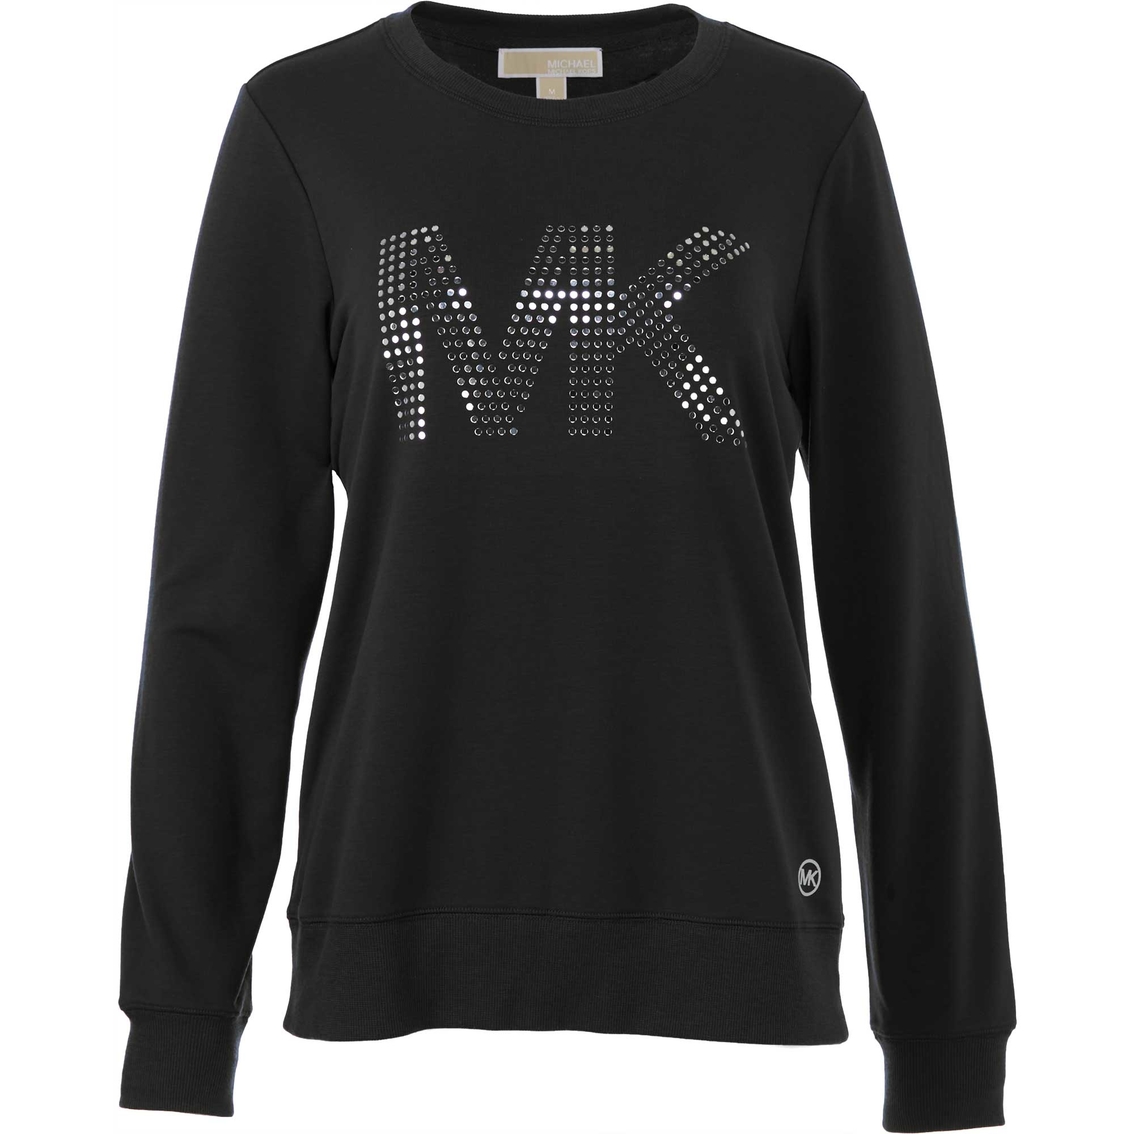 Michael Kors Mirror Mk Sweatshirt | Tops | Clothing & Accessories ...